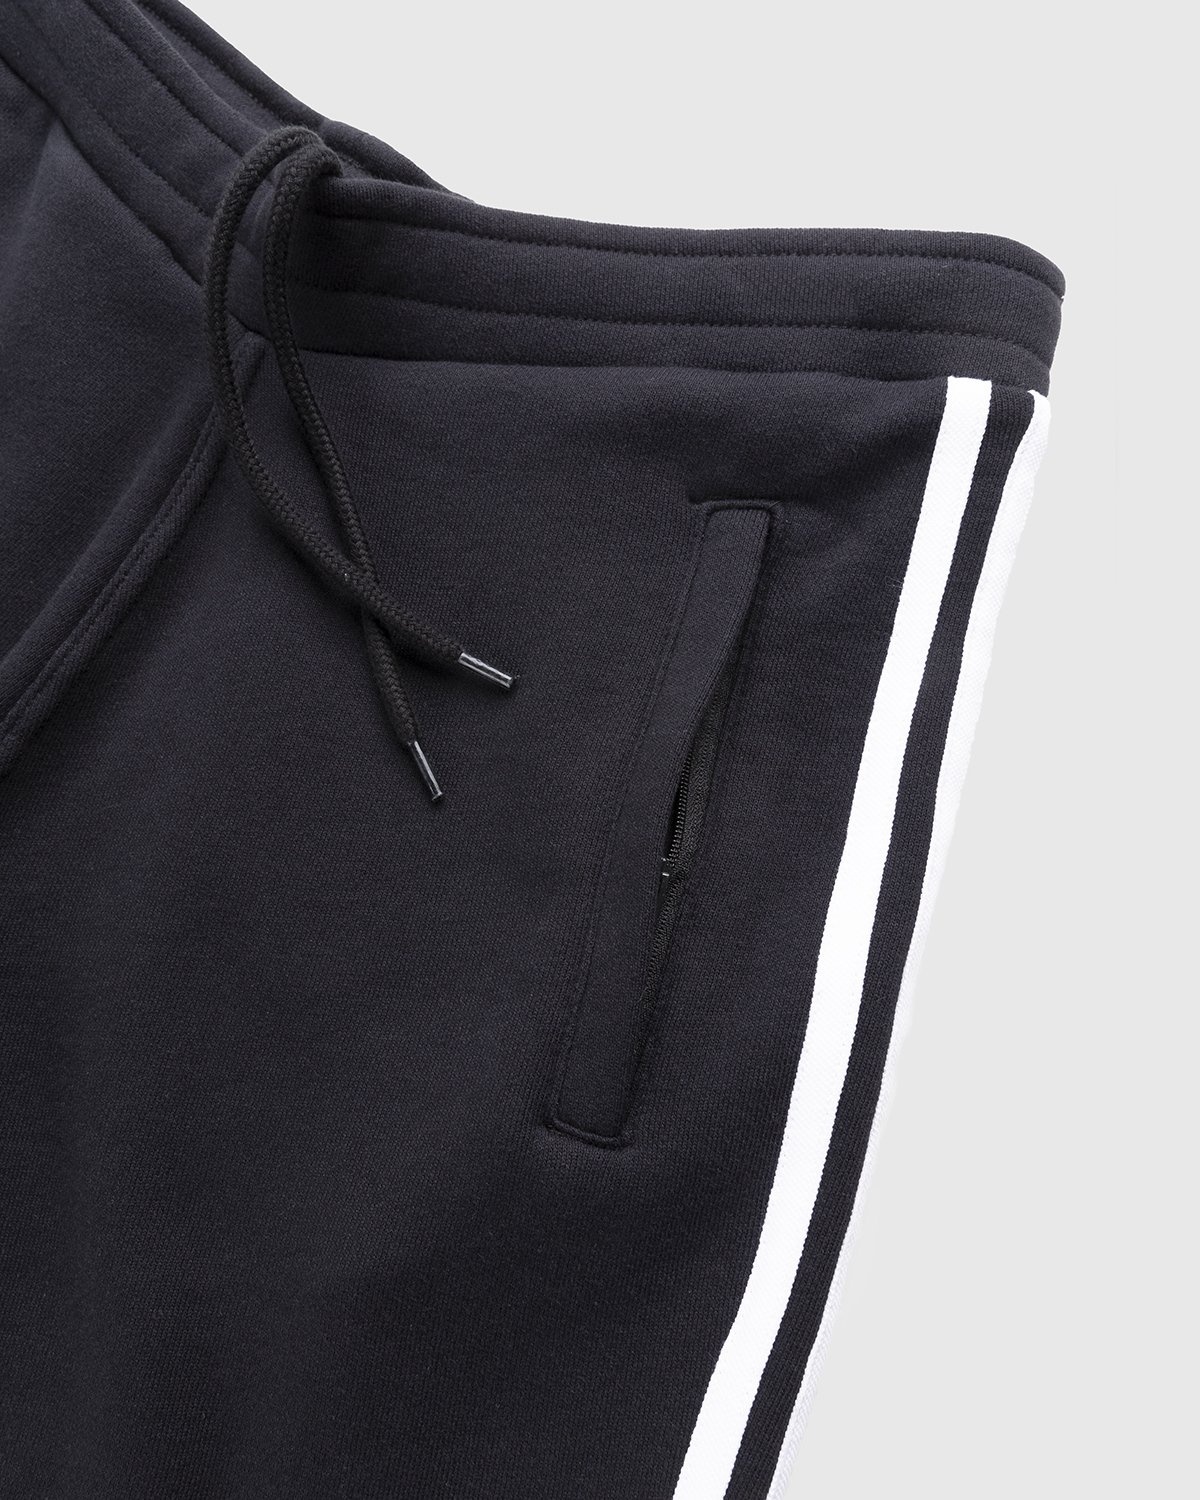 Adidas – 3 Stripe Short Black - Sweatshorts - Black - Image 4